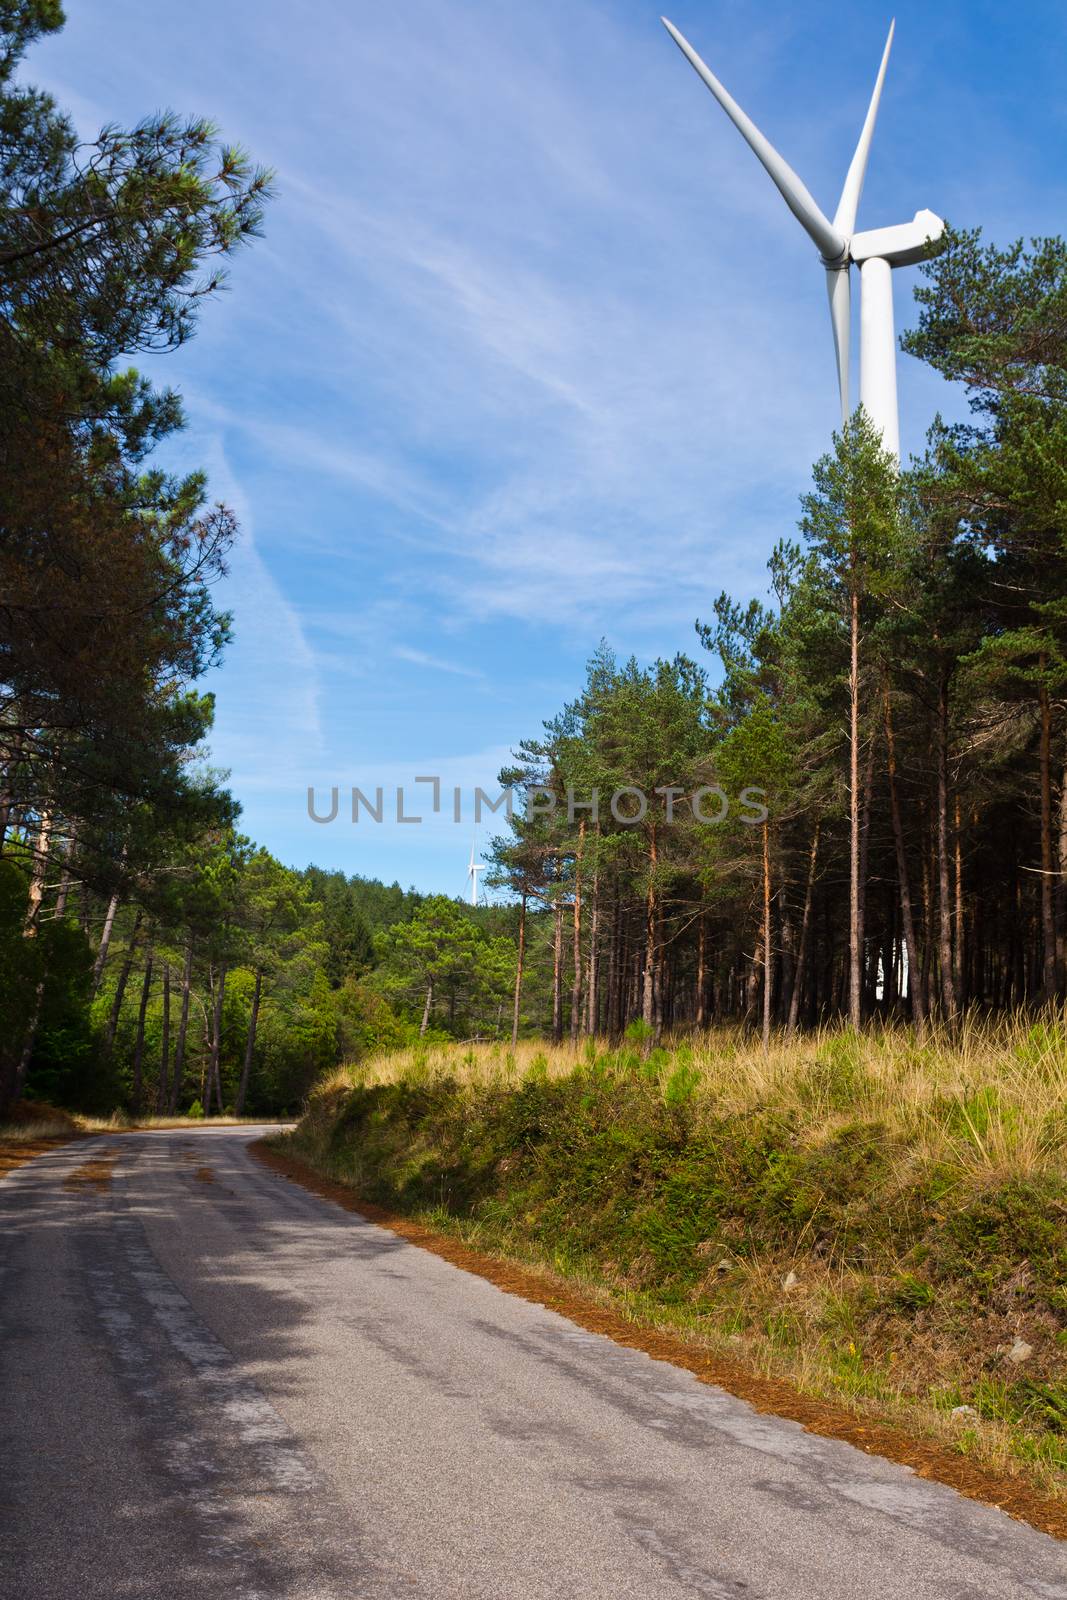 Wind Turbine by gkuna